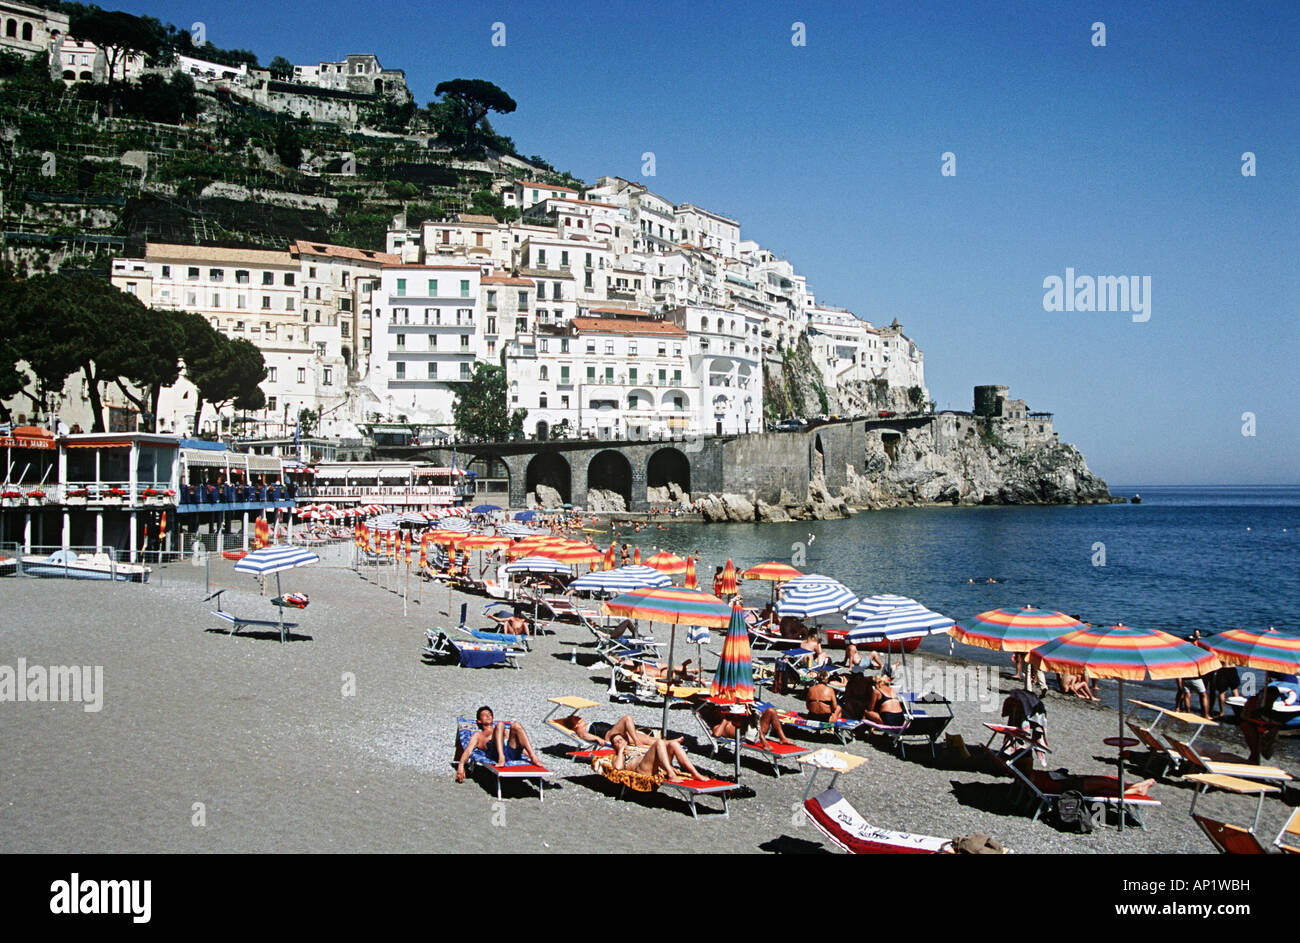 Beach and houses in the town of Amalfi, Amalfi Coast, Campania, Italy Stock Photo